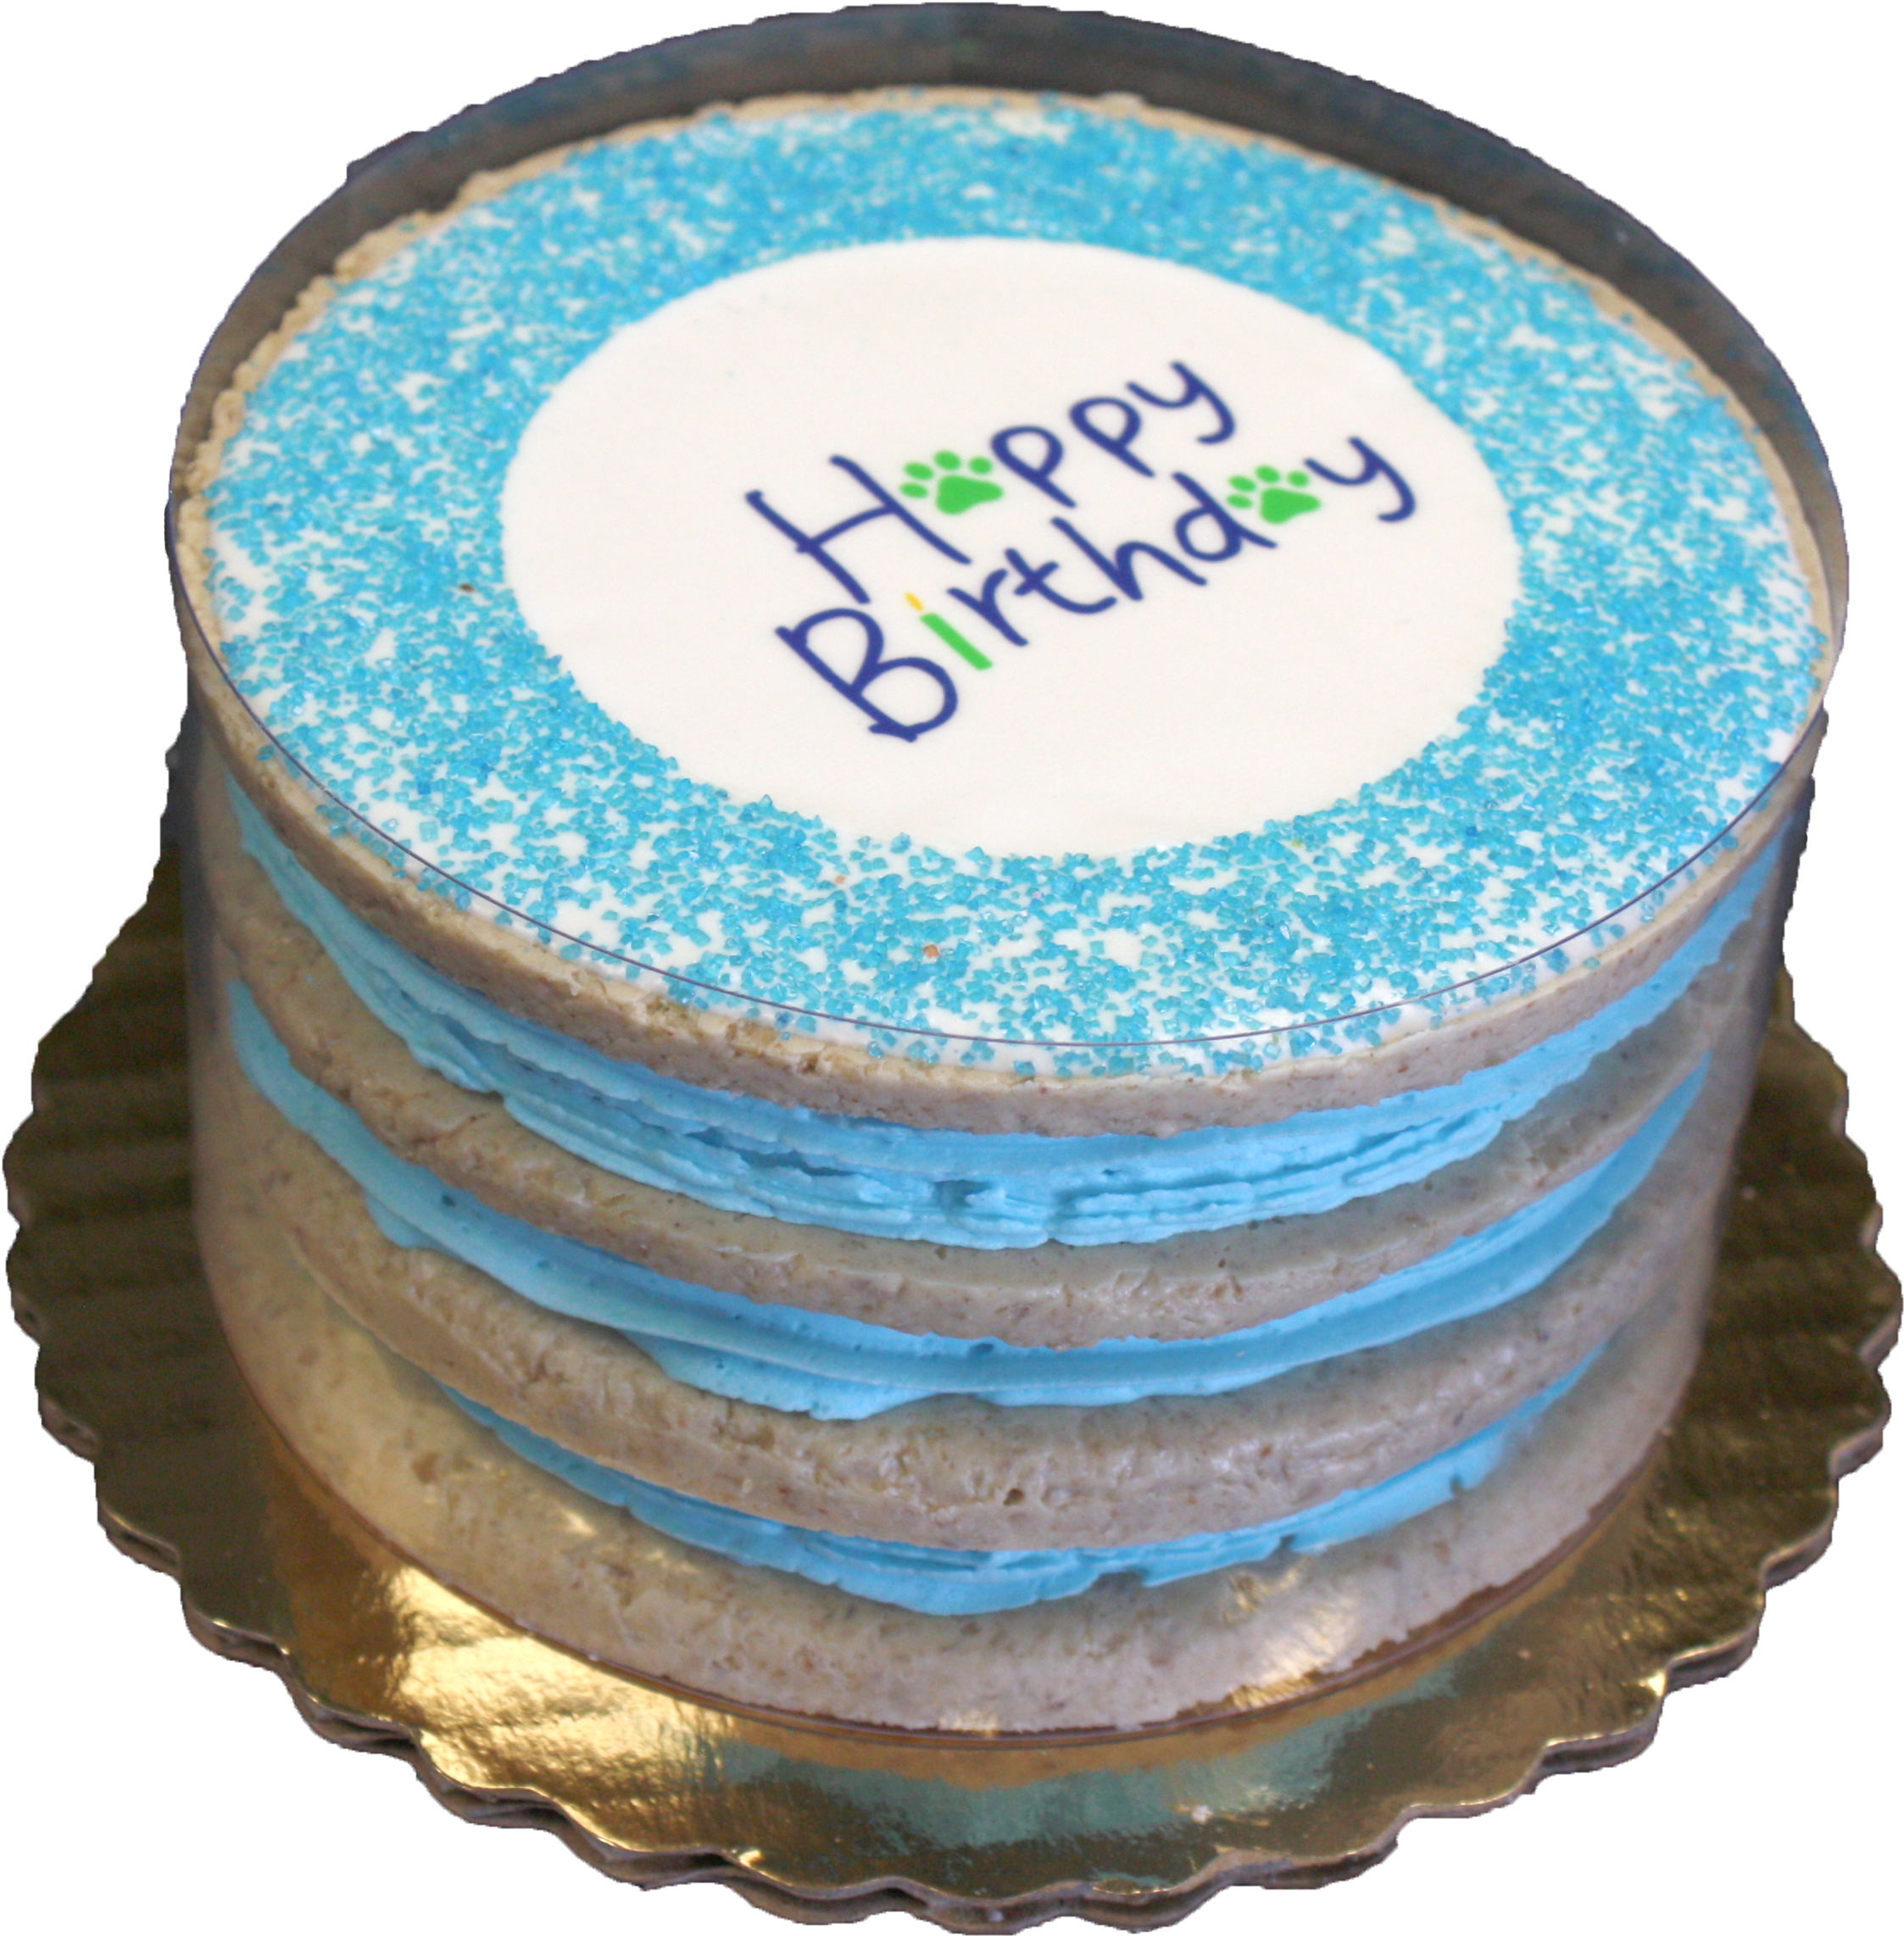 82102 Layered Cake/Cupcake - Click Image to Close